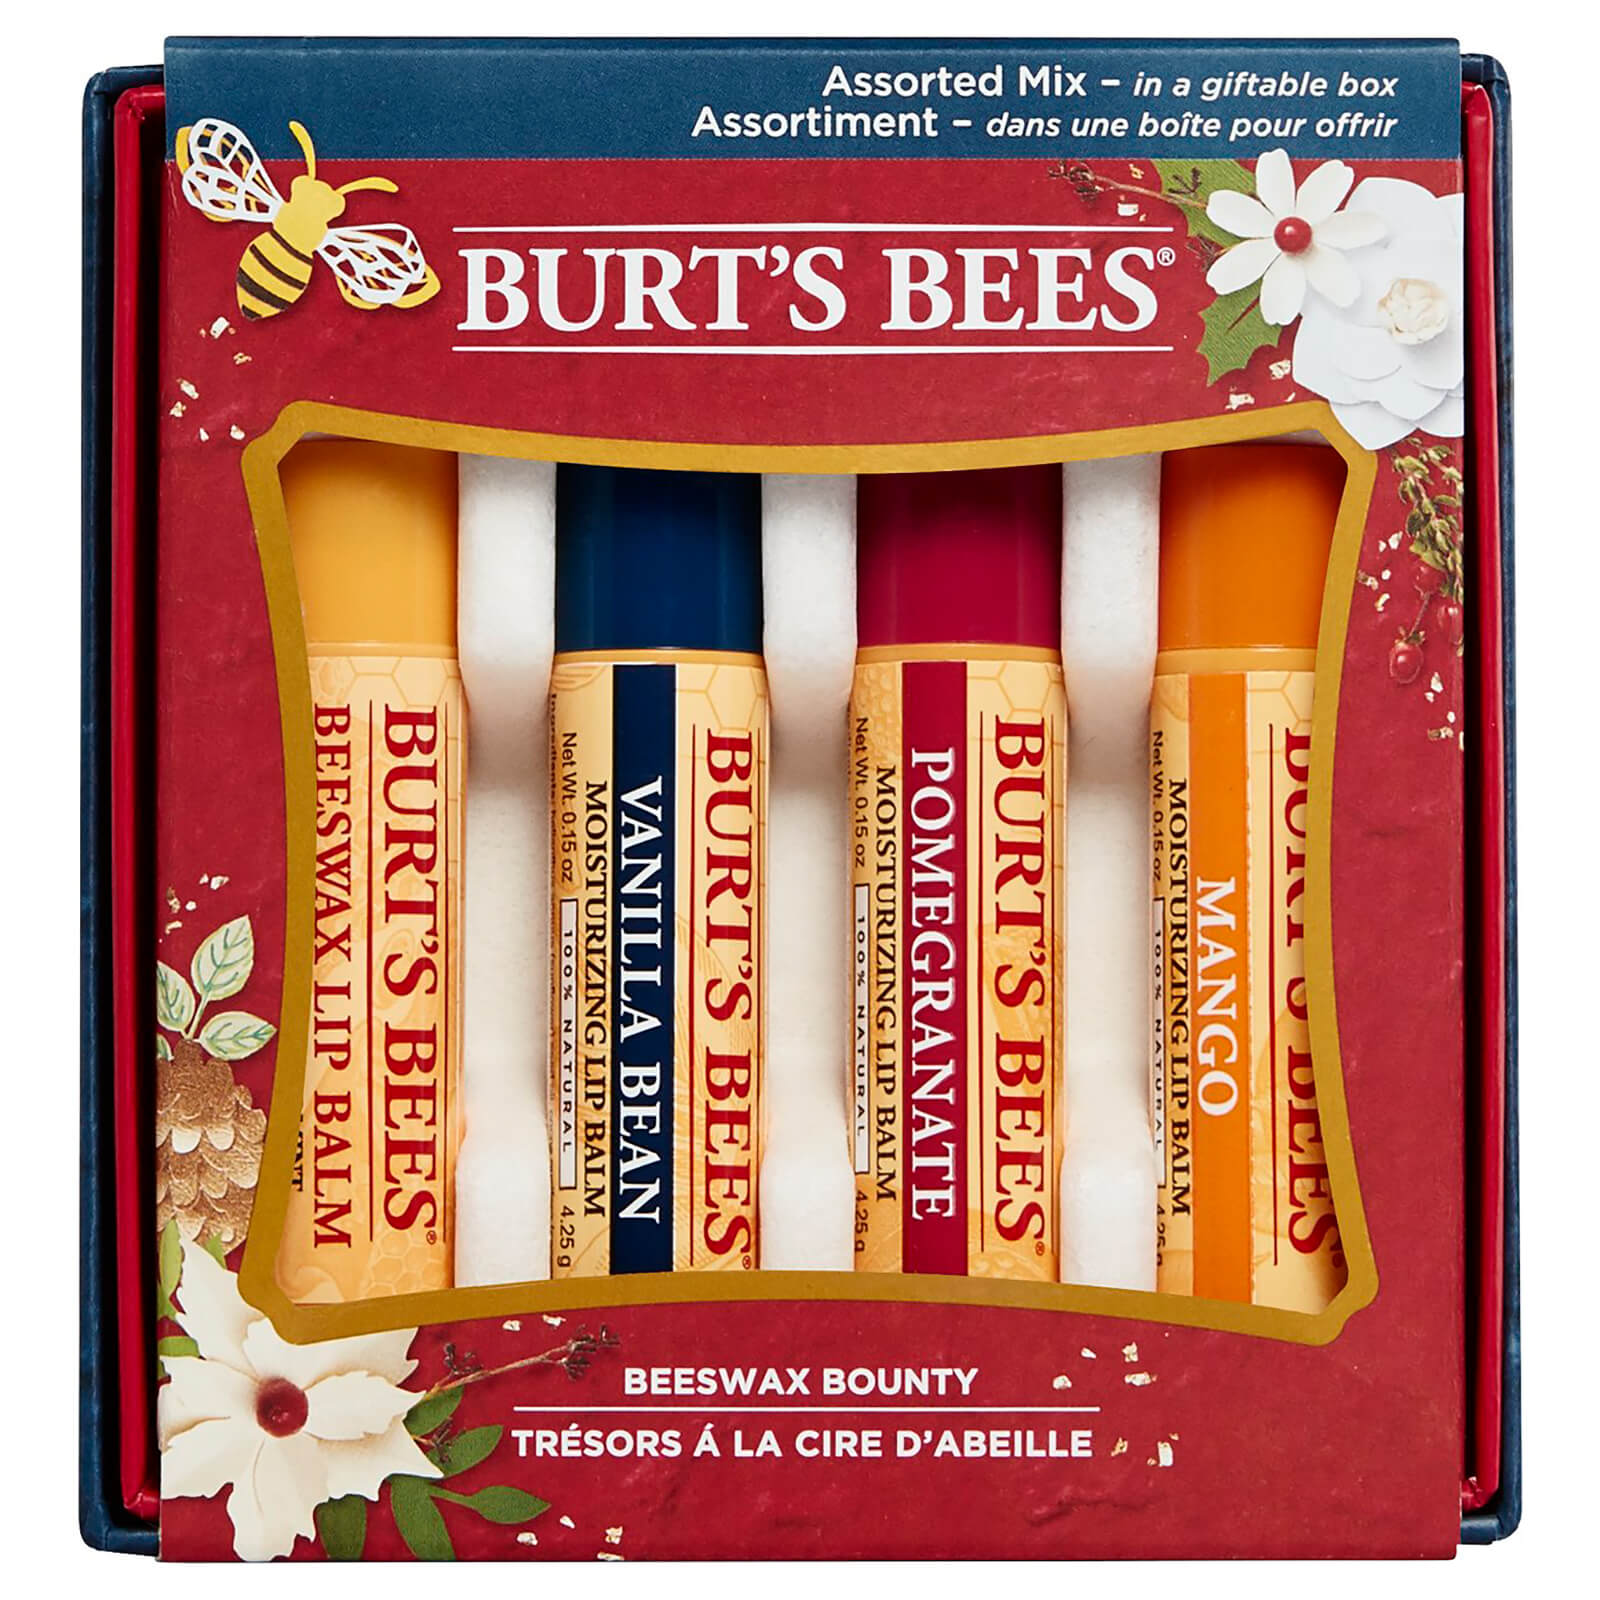 Burt's Bees Beeswax Bounty Gift Set